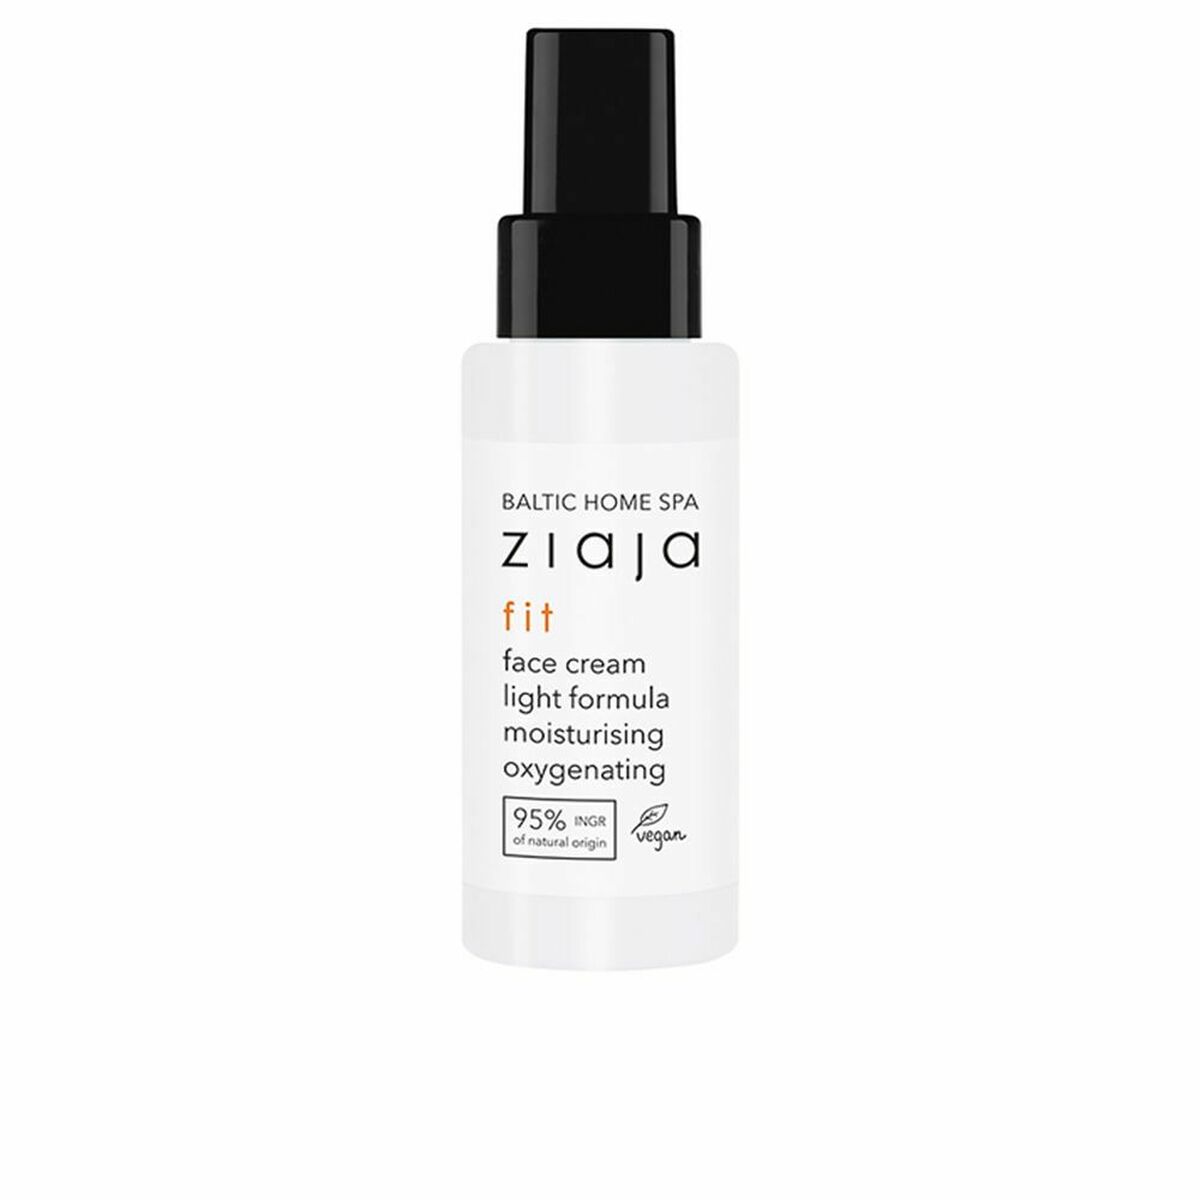 Hydrating Facial Cream Ziaja Baltic Home Spa Fit (50 ml)